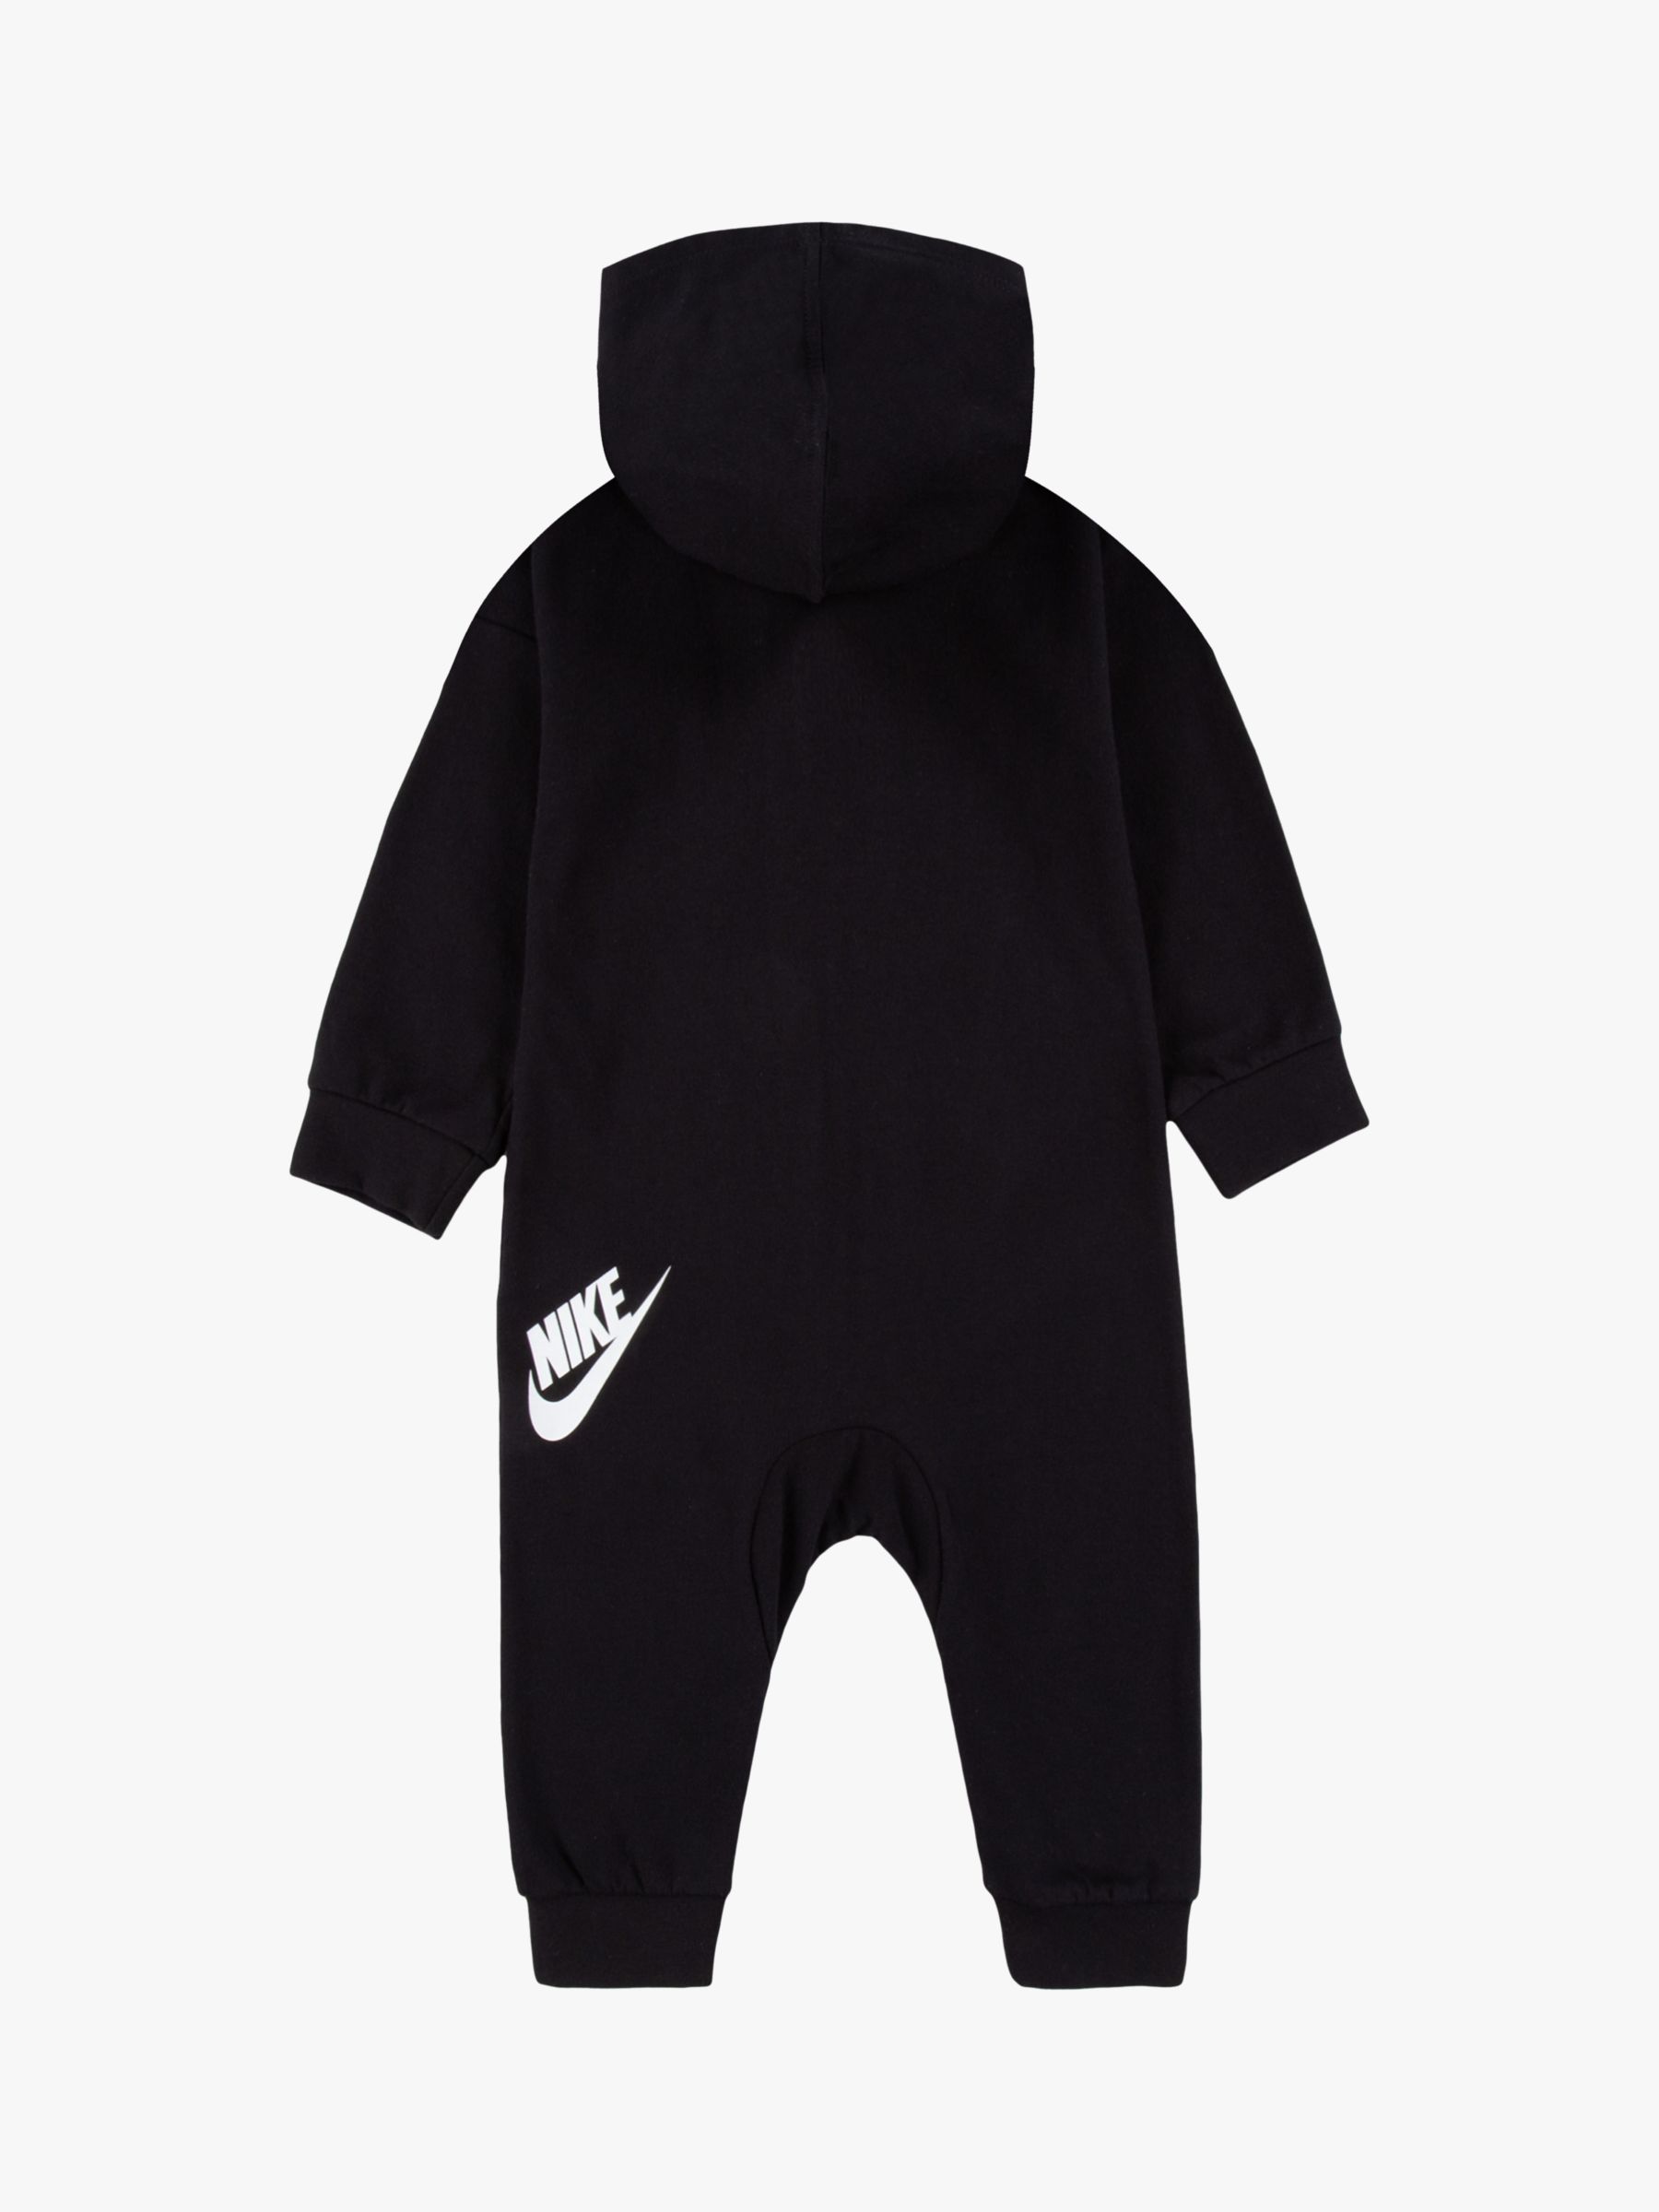 Nike Baby Hooded Logo Sleepsuit, Black, Black at John Lewis & Partners